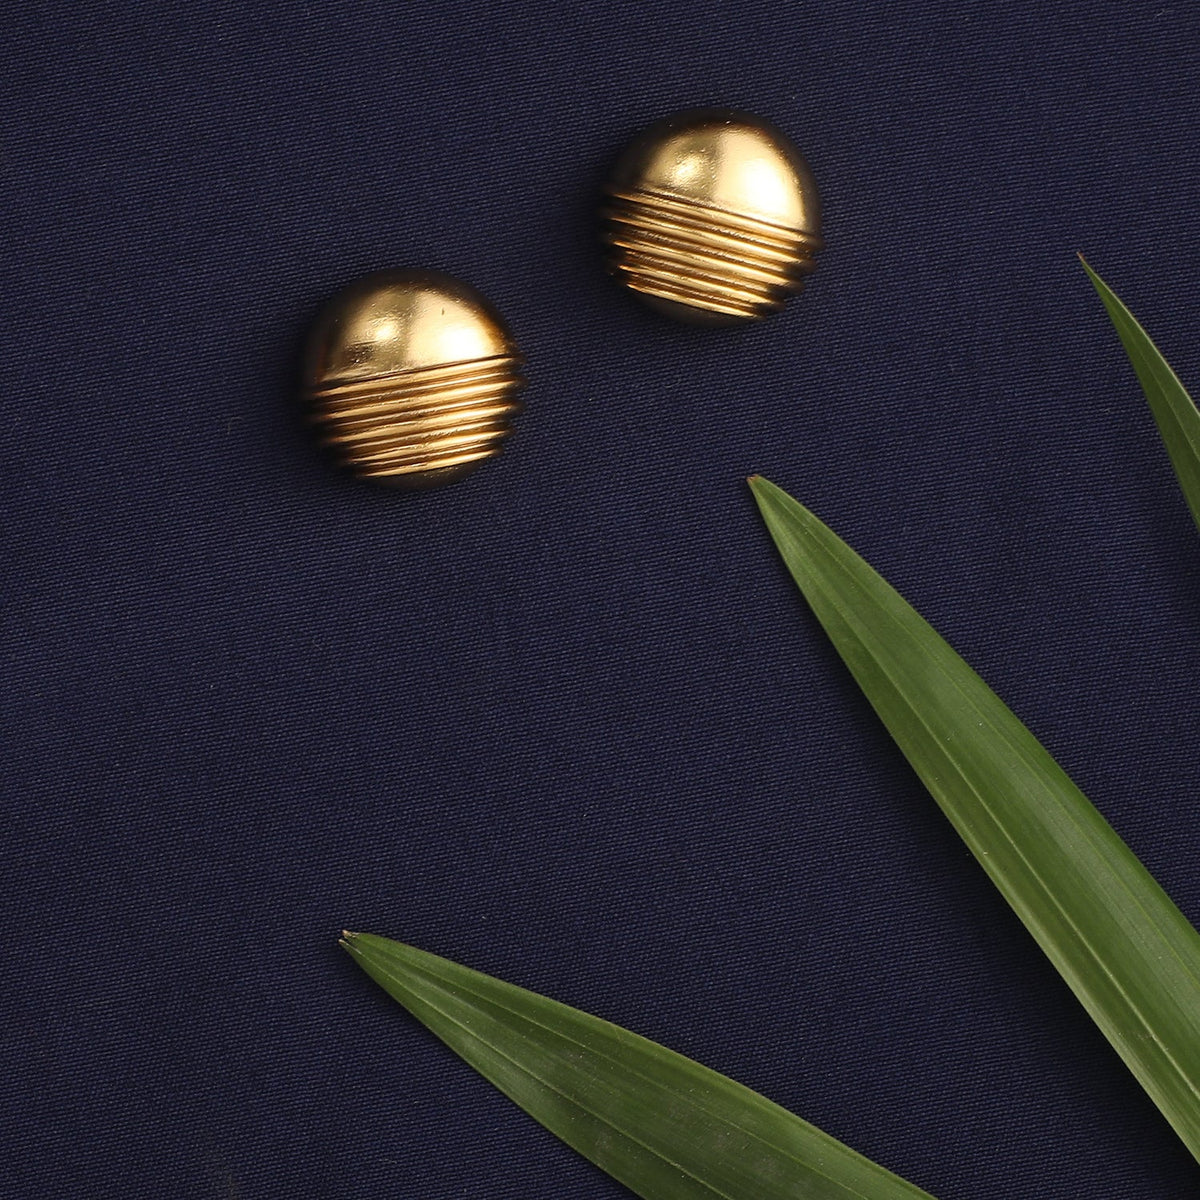 Eryx Gold-Plated Tribal Earrings